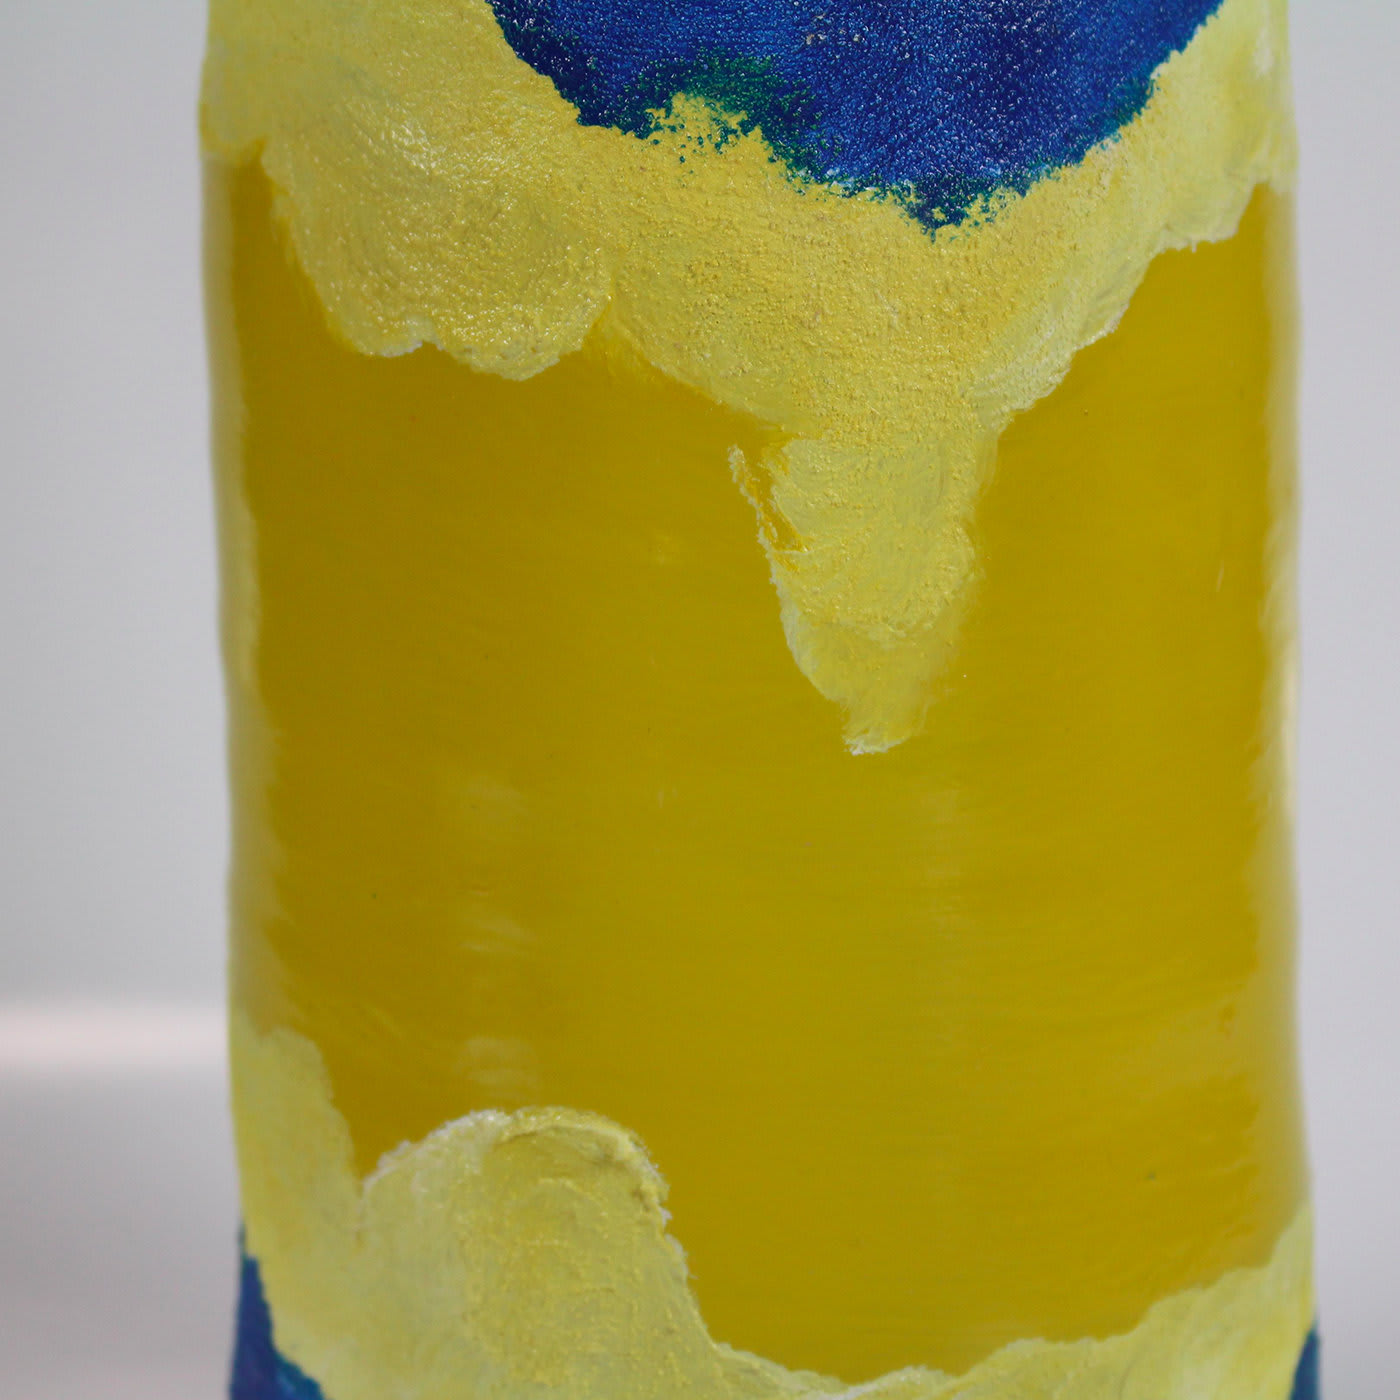 Terracotta #5 Vase by Mascia Meccani - Meccani Design